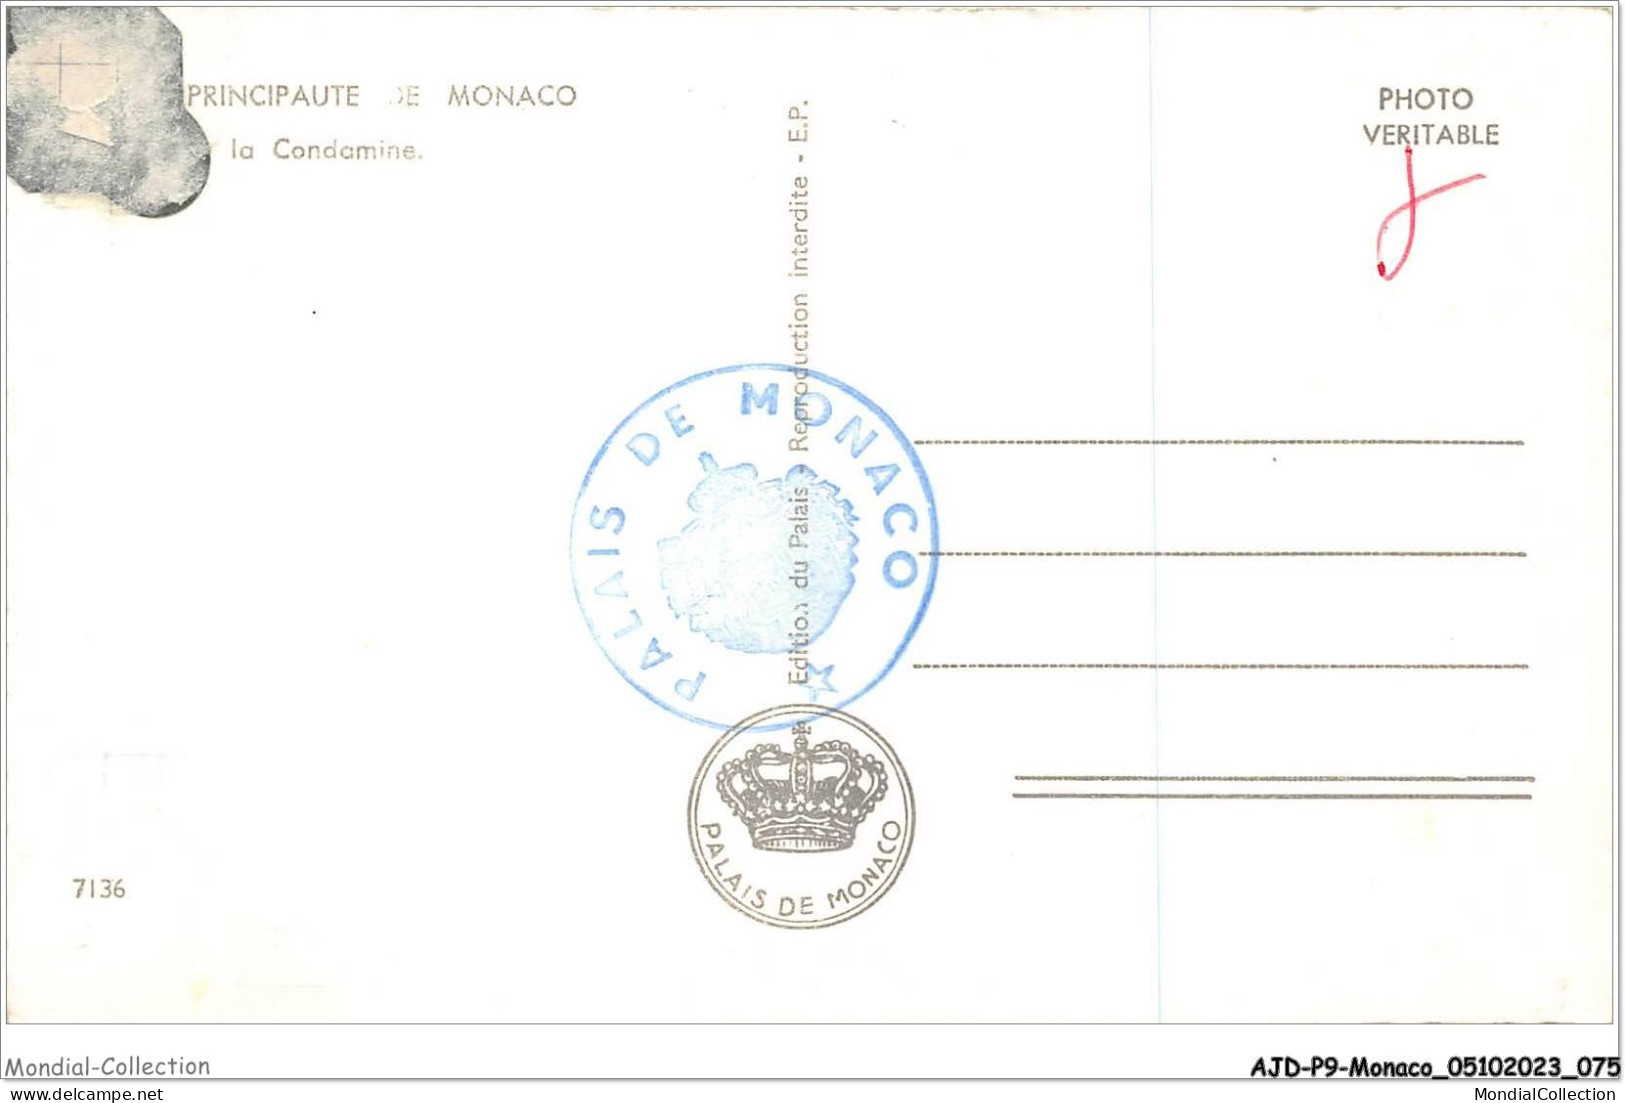 AJDP9-MONACO-0936 - Principauté De MONACO - La Codamine  - La Condamine